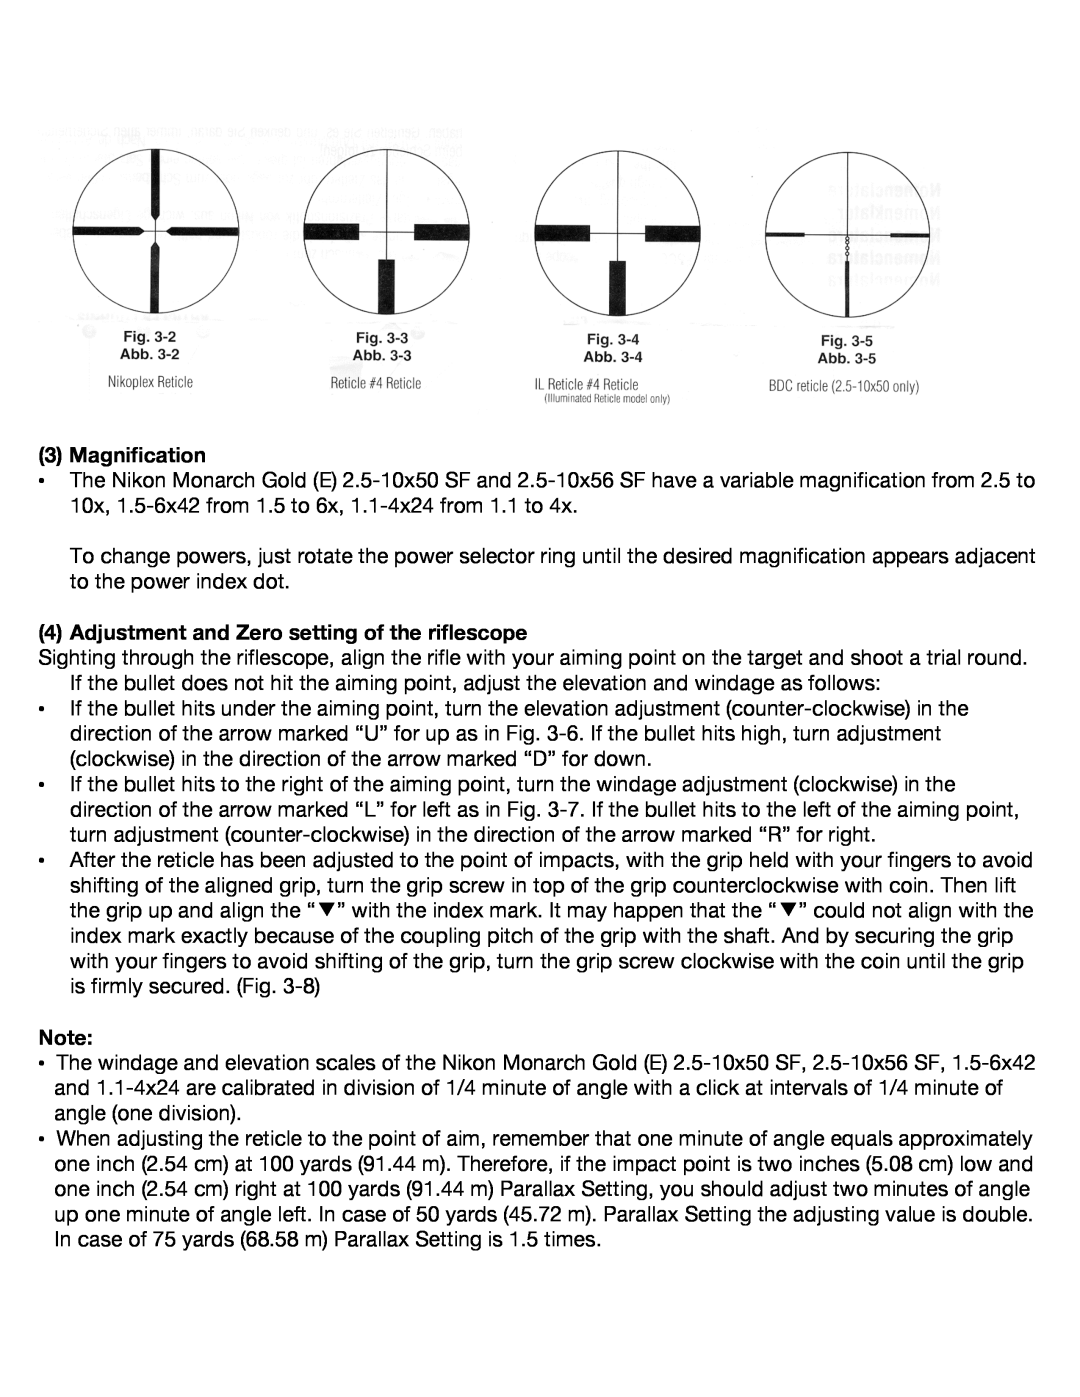 Nikon Monarch Gold (E) instruction manual Magnification, Adjustment and Zero setting of the riflescope 